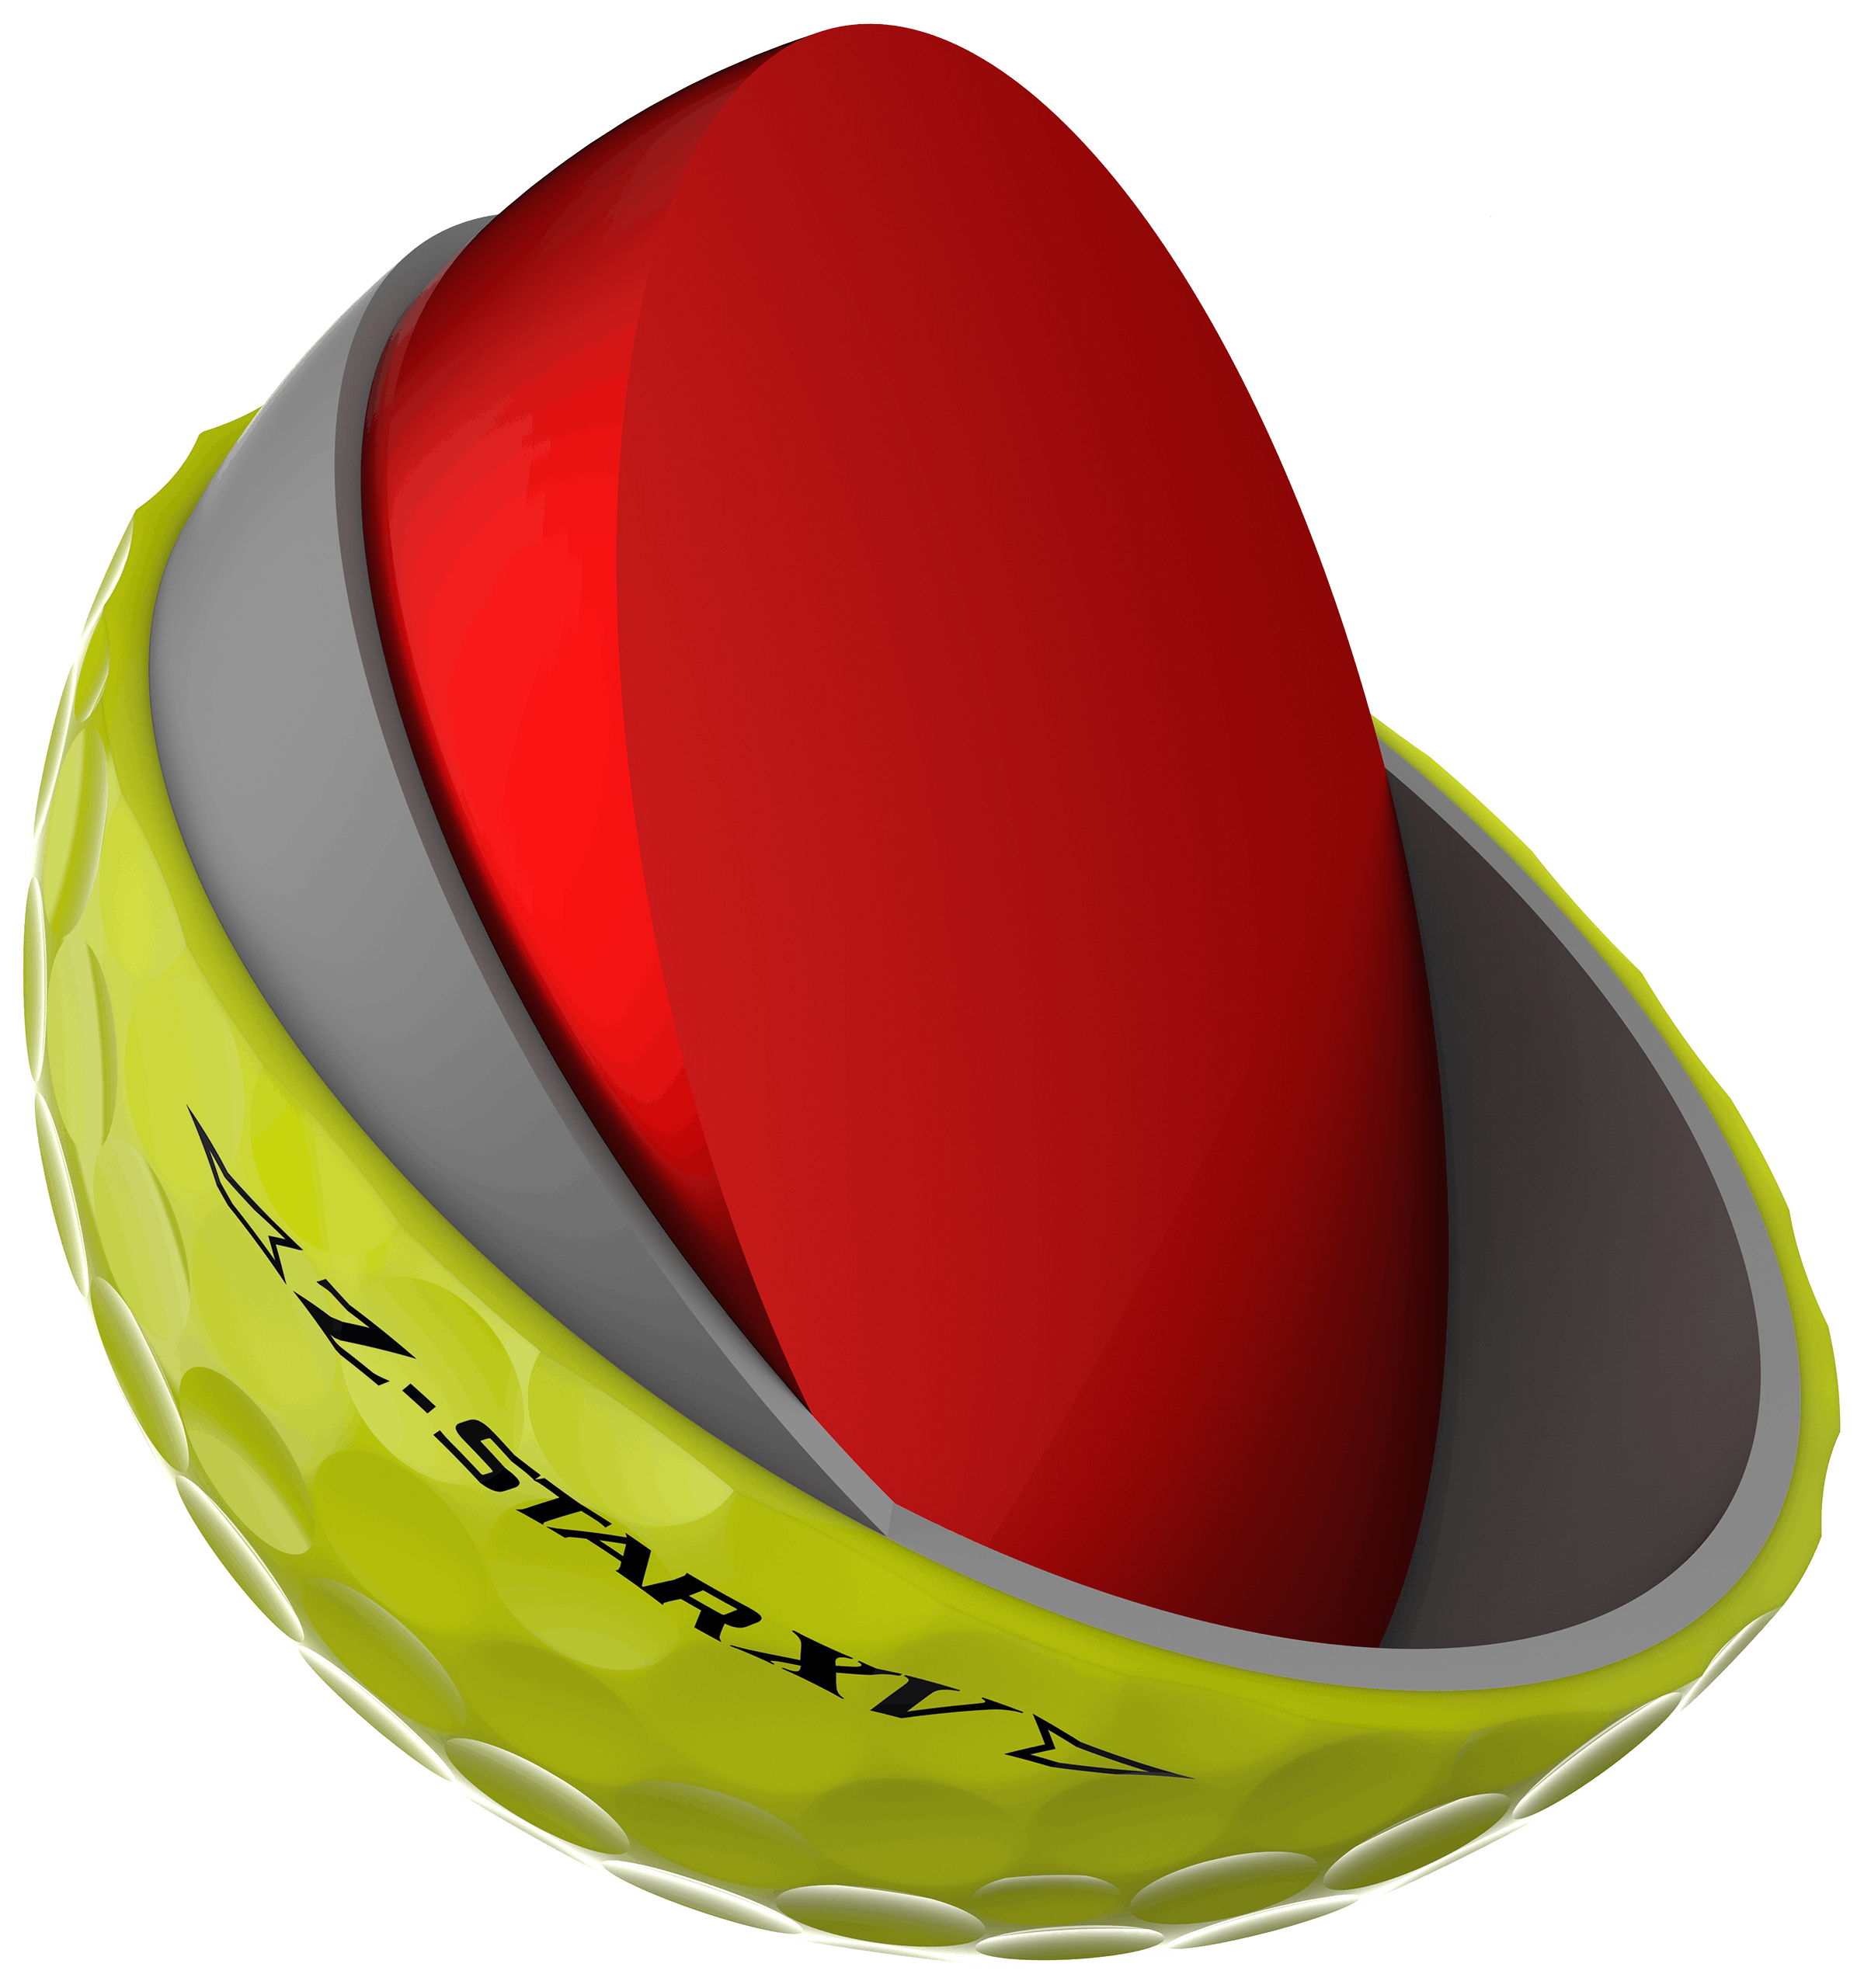 Srixon Z-Star XV8 Golf Ball · Tour Yellow